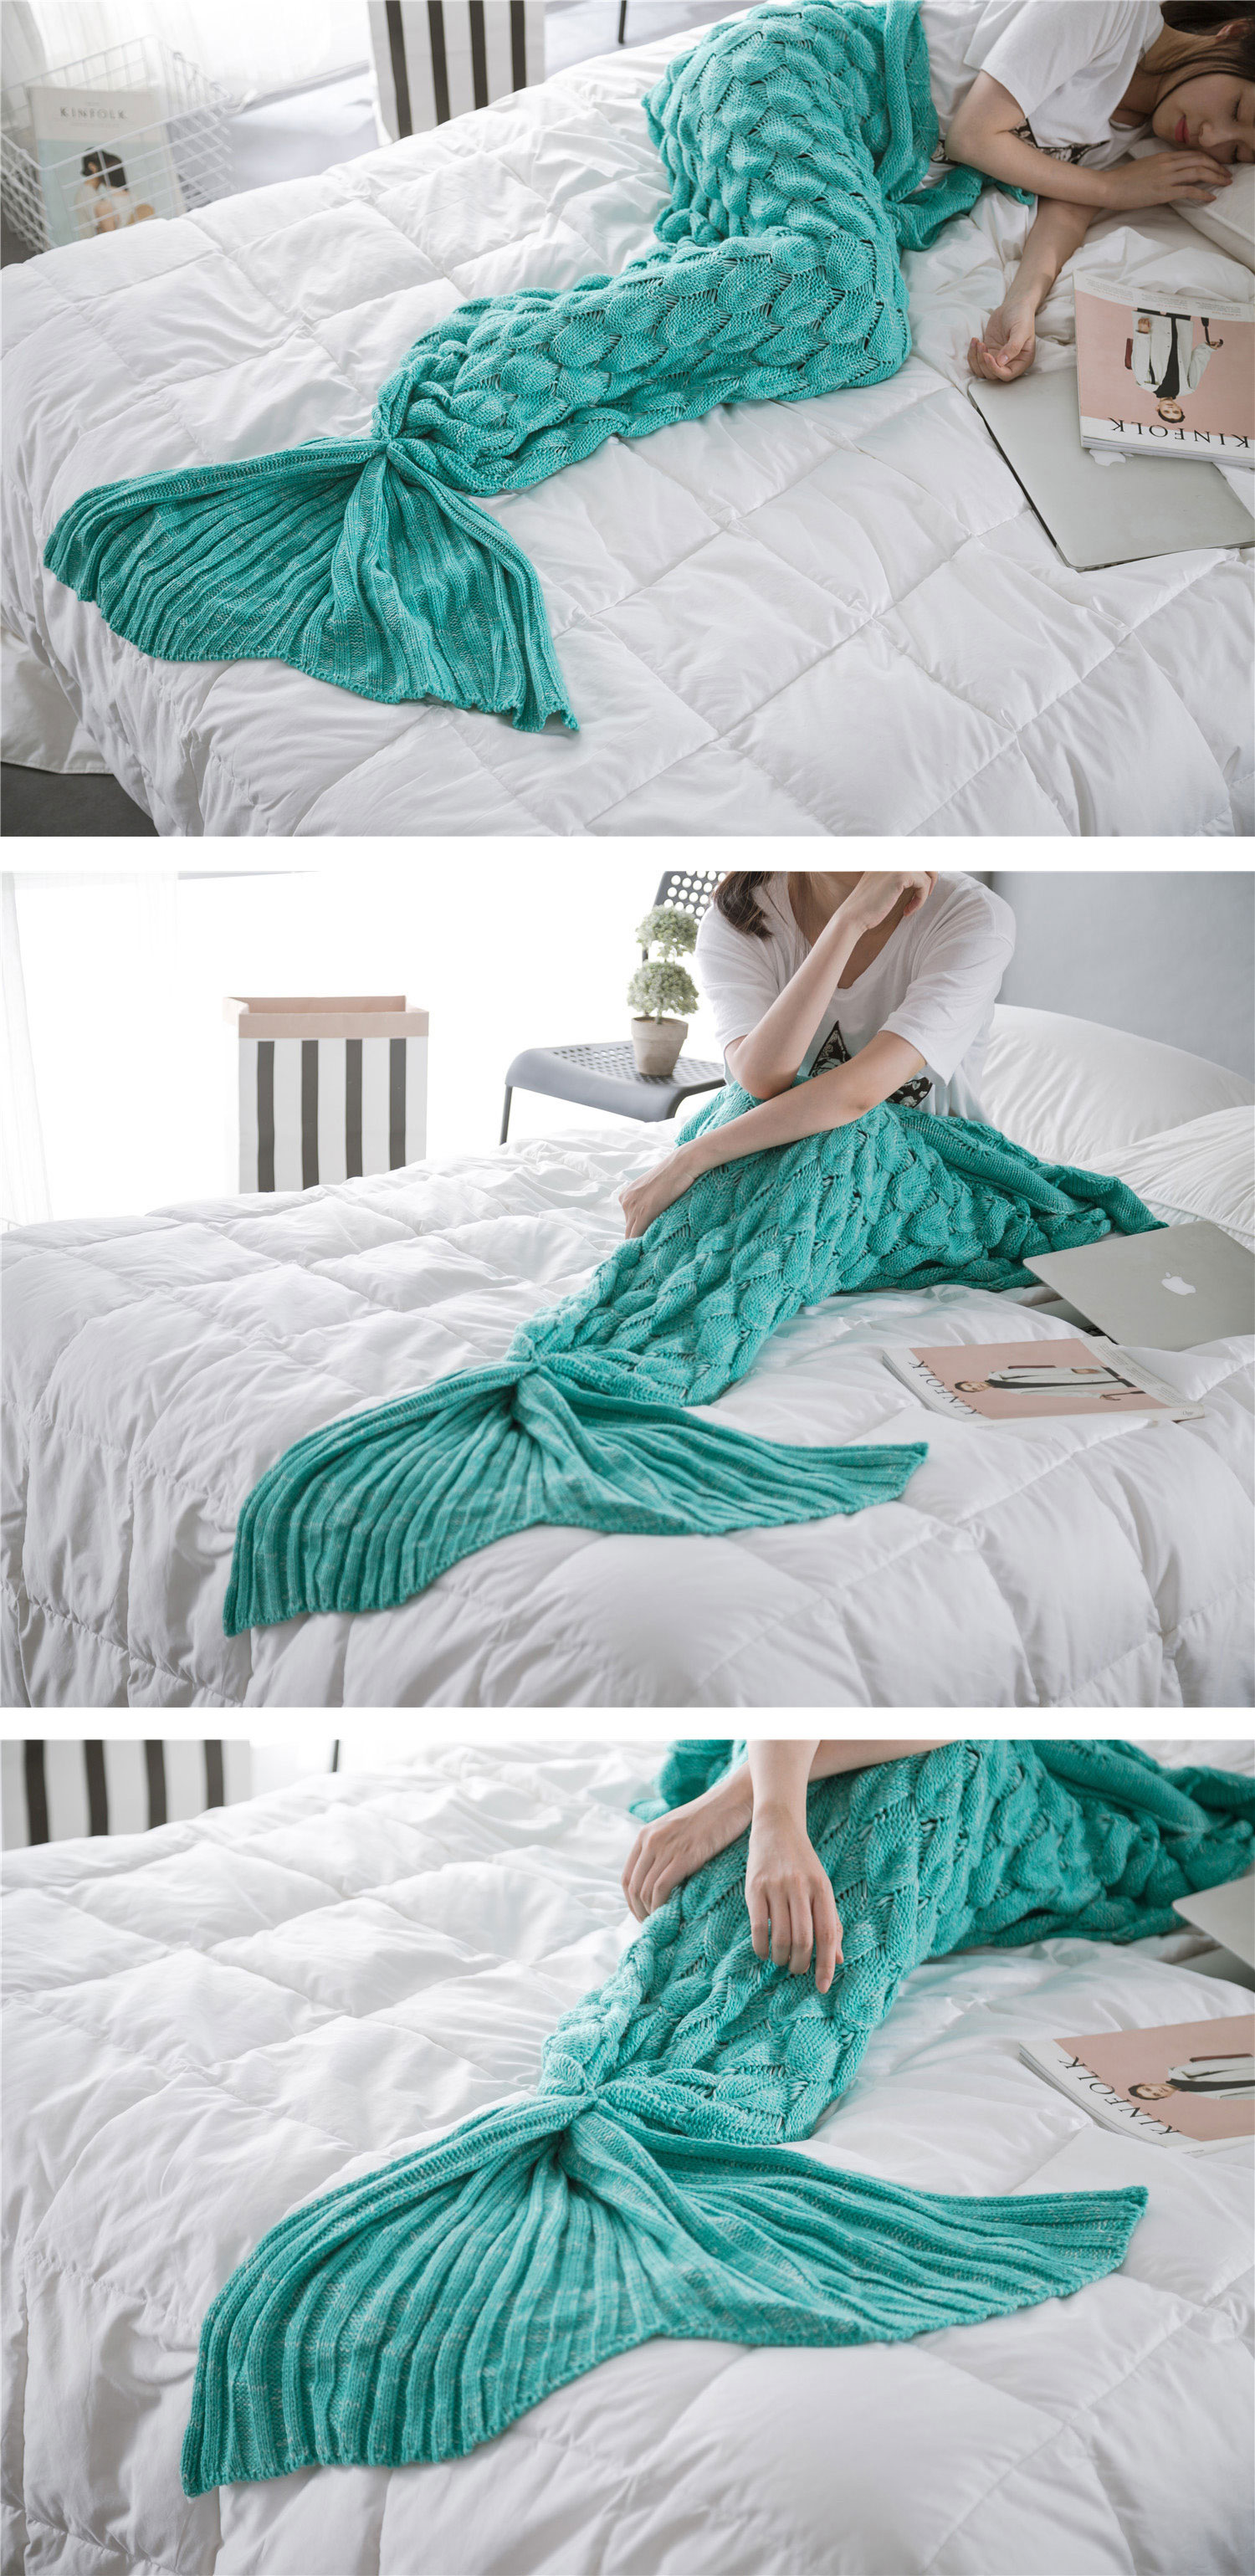 Honana-WX-39-90x190cm-Yarn-Knitting-Mermaid-Tail-Blanket-Fish-Scales-Style-Super-Soft-Sleep-Bag-Bed--1093601-5